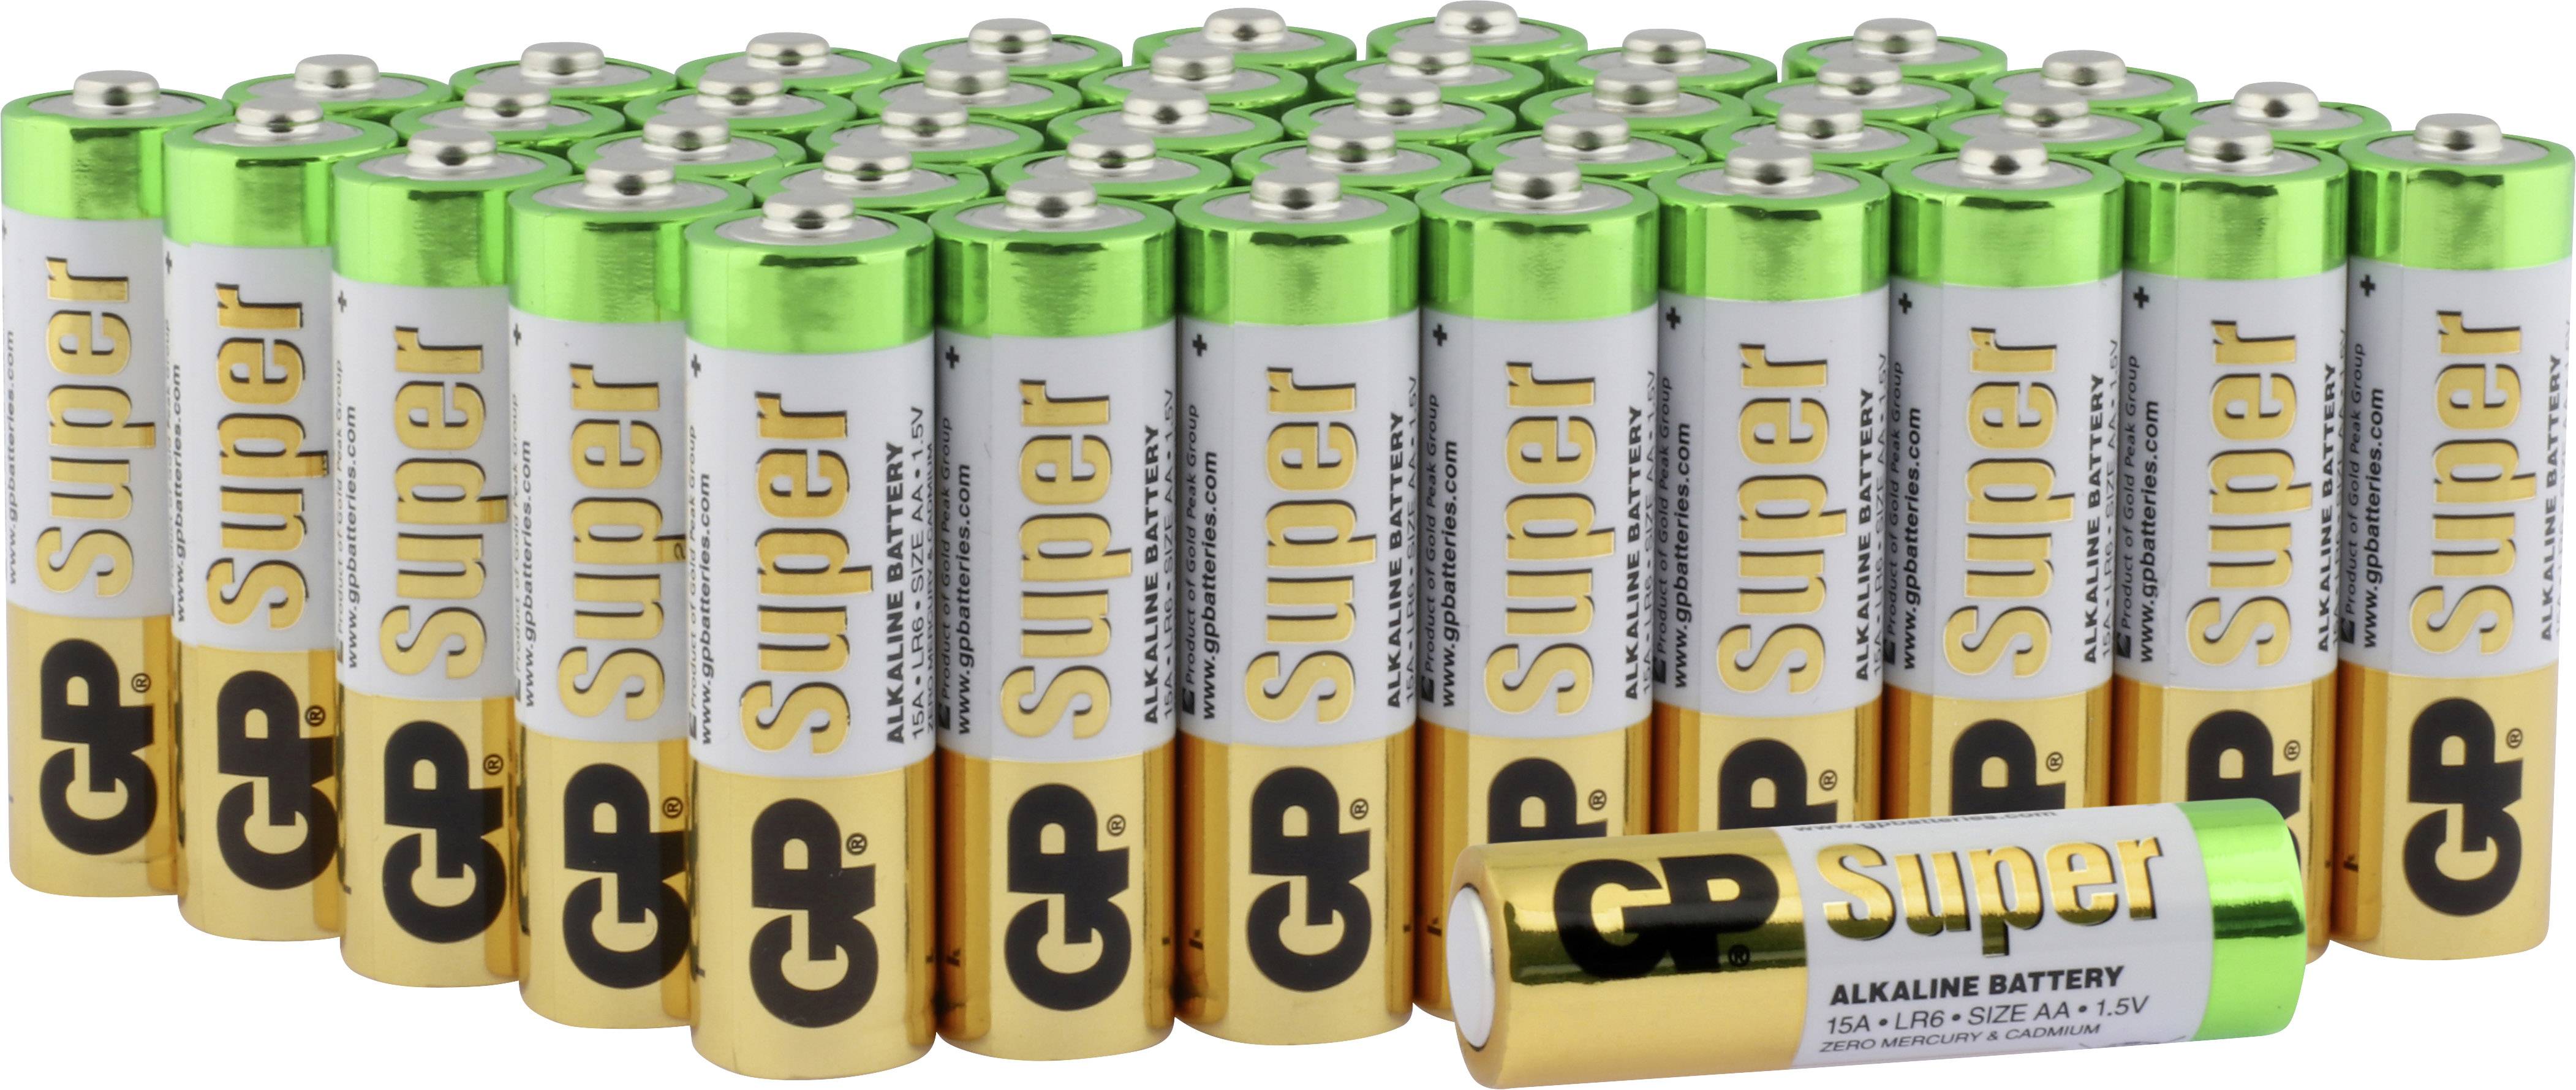 Gp batteries. Lr06 1.5v GP super. GP Alkaline 15a lr6. GP super Alkaline 15a lr6. Элемент питания Camelion Batterien AA lr6.